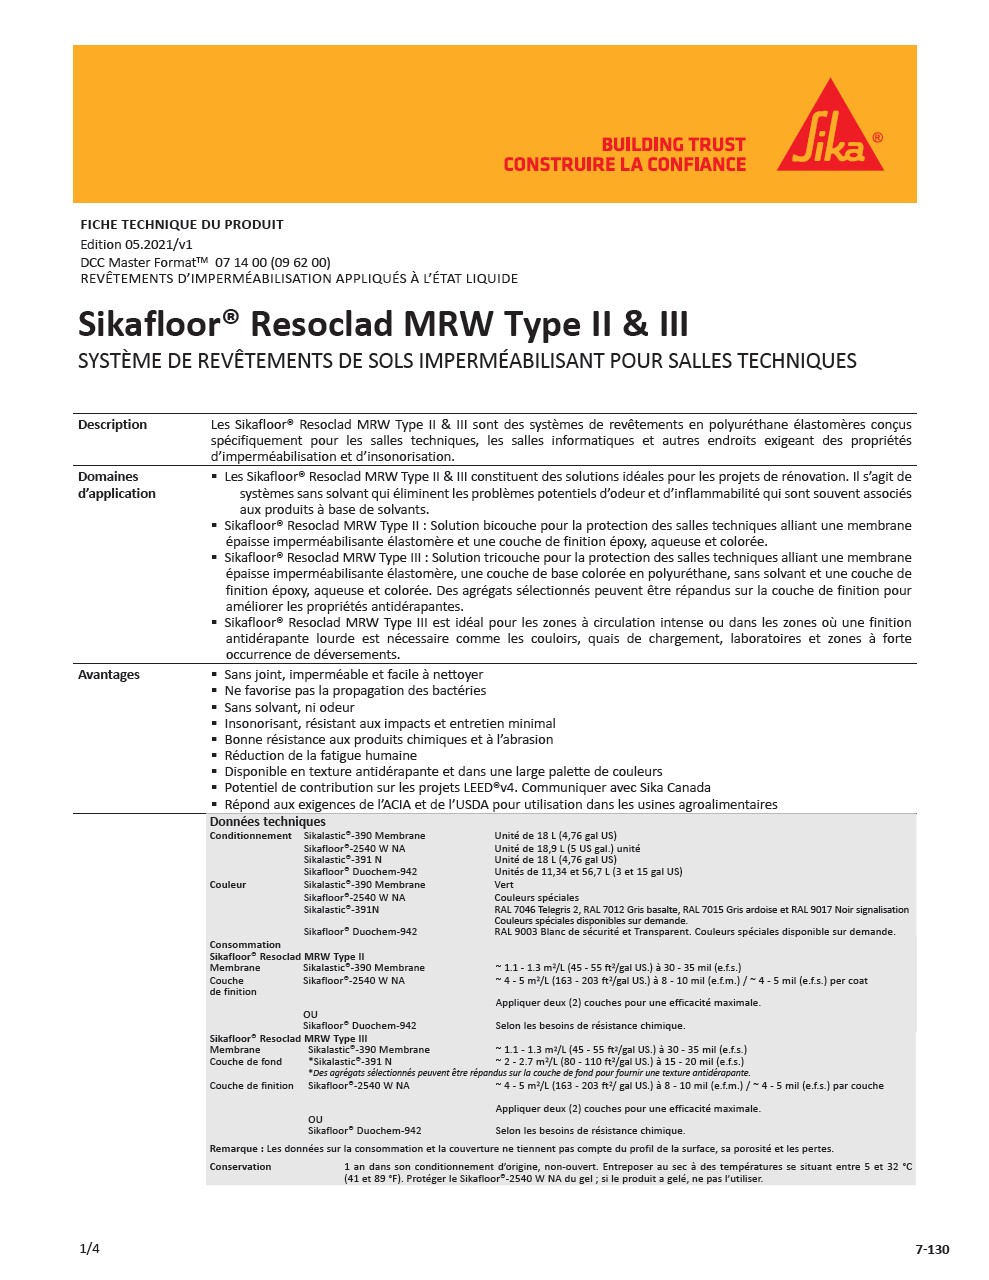 Sikafloor®-Resoclad MRW